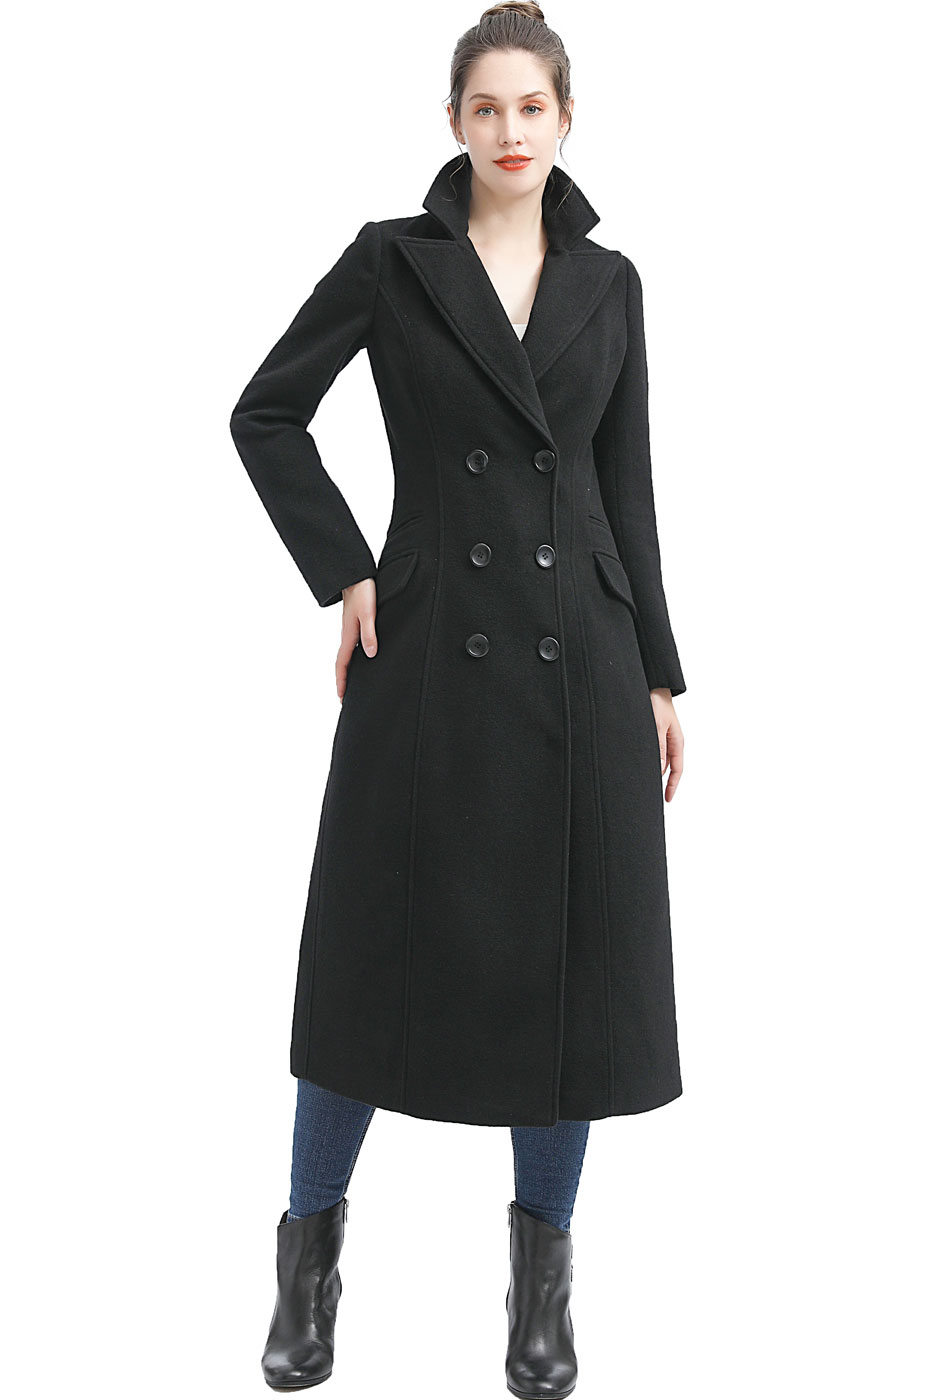 Women Fay Wool Walking Coat (Regular & Plus Size & Petite) - image 1 of 4